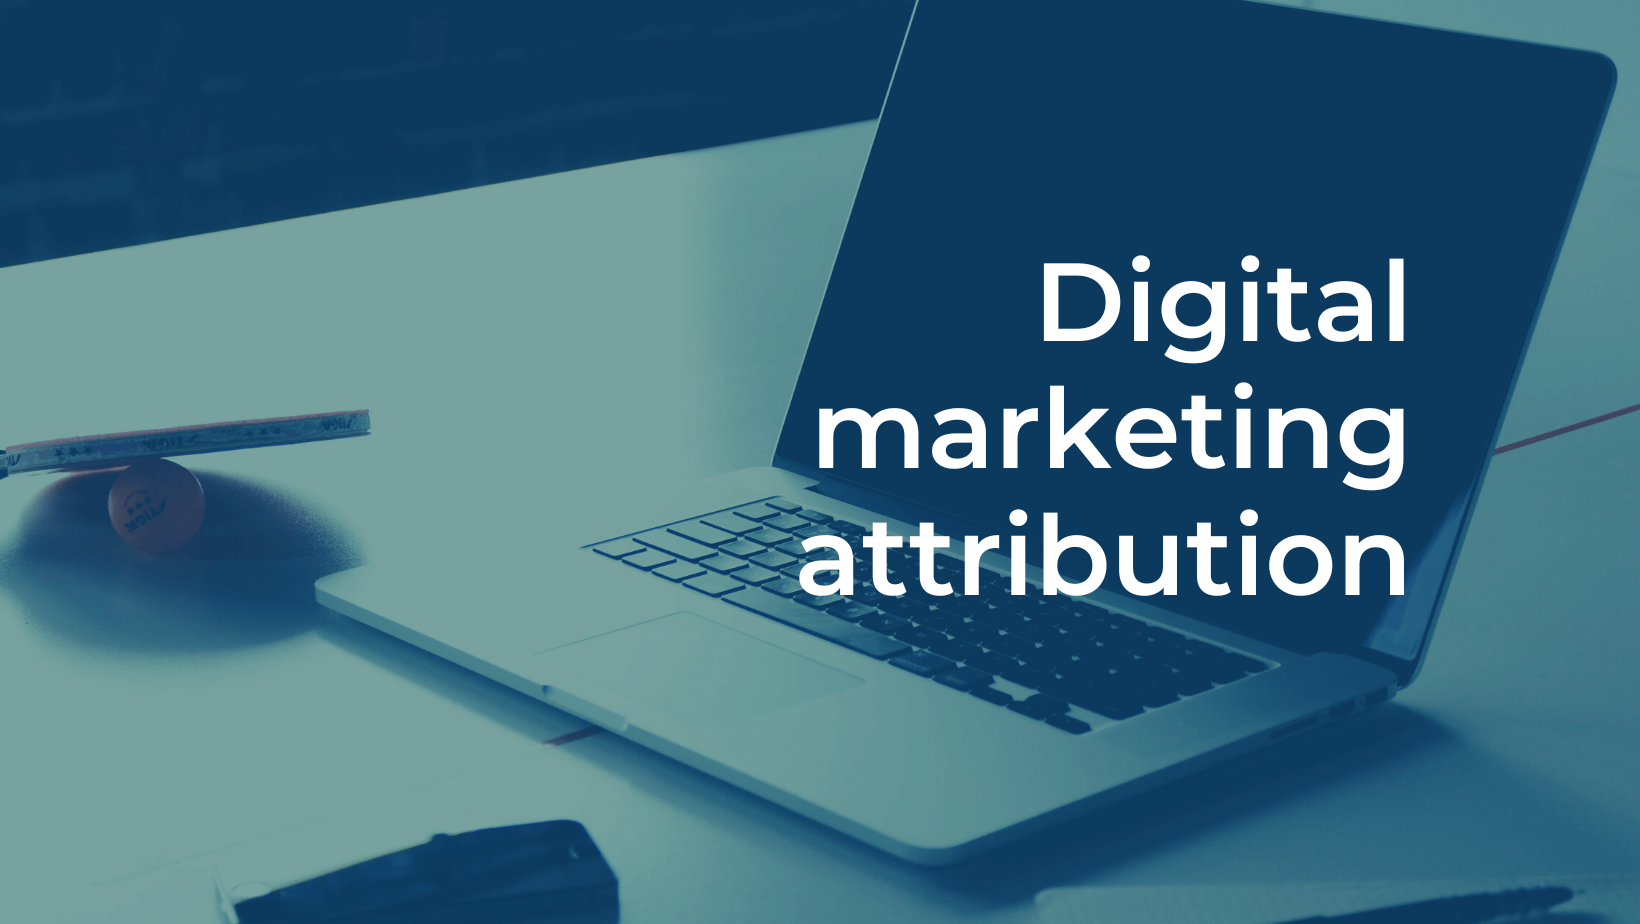 The digital marketing attribution problem